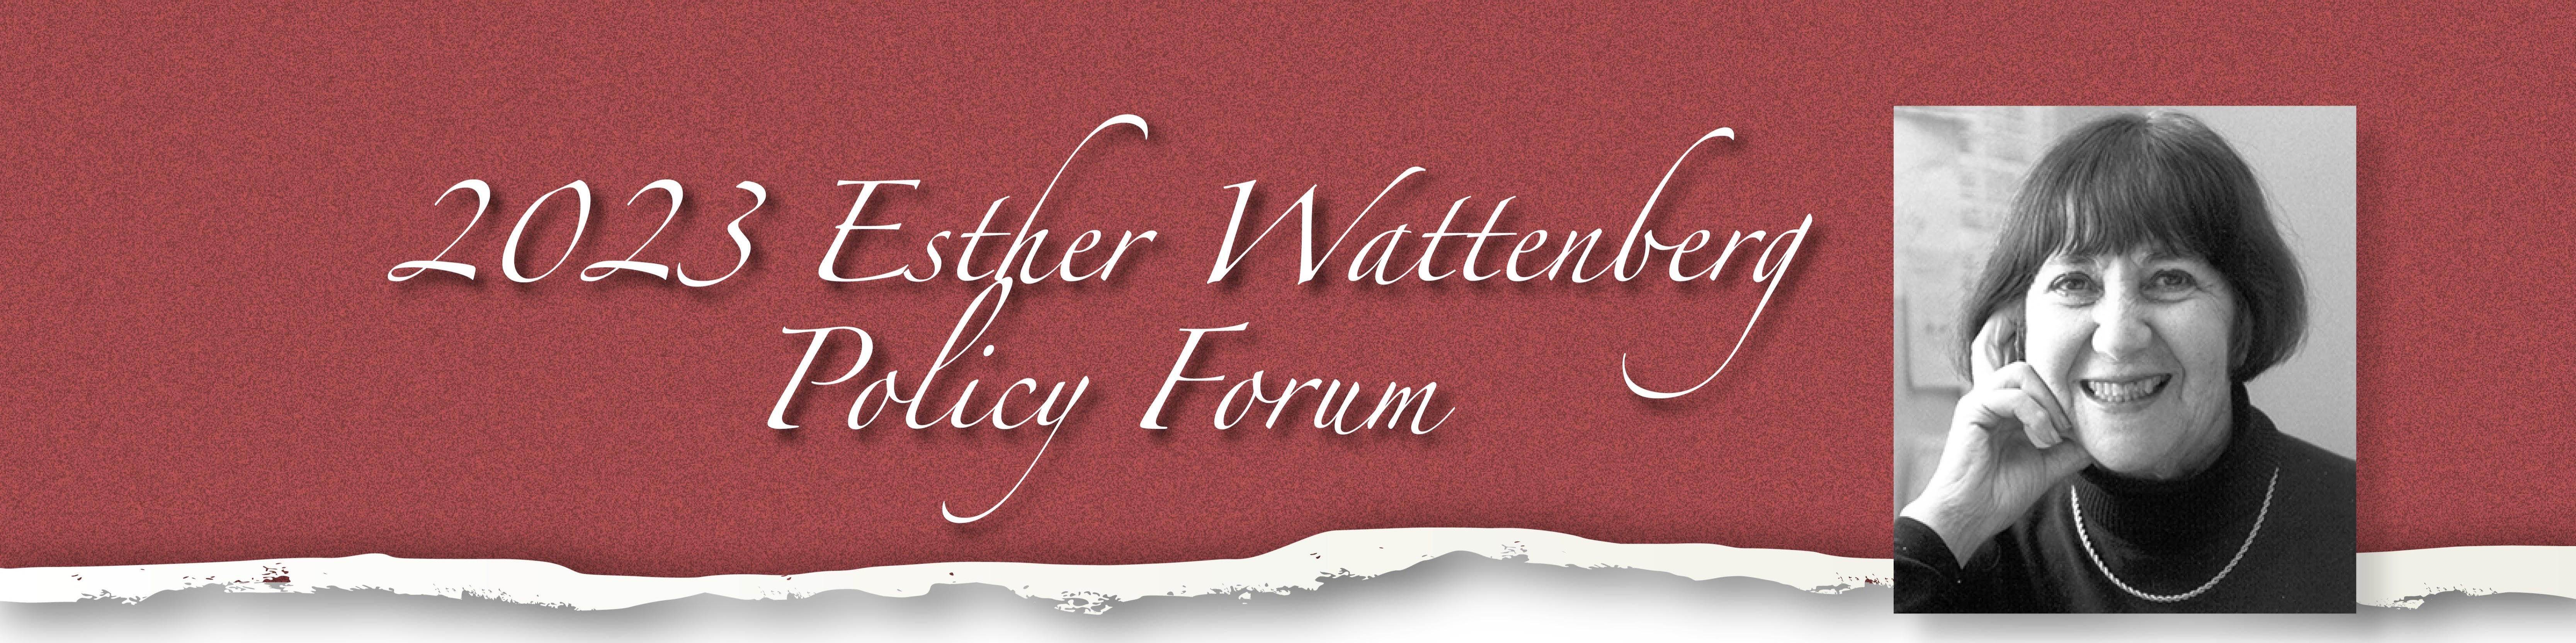 Esther Wattenberg Policy Forum